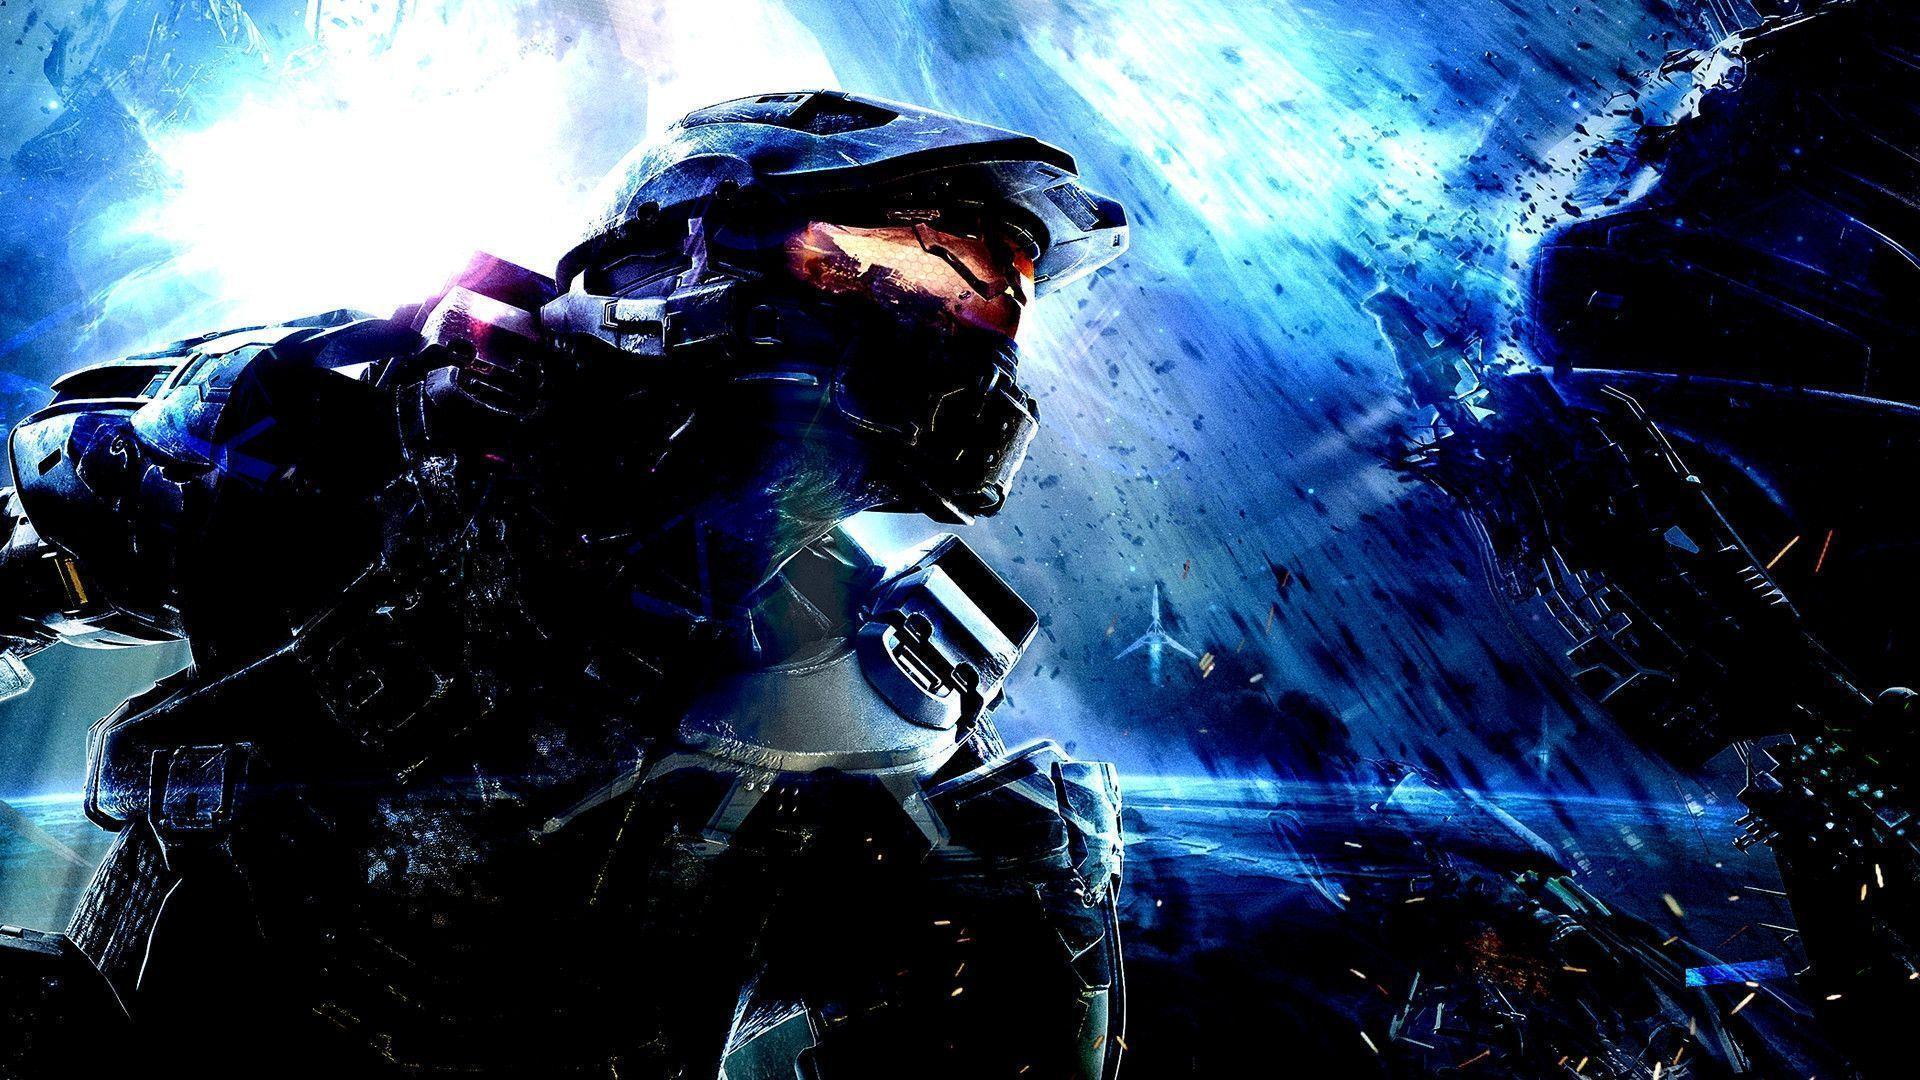 Halo 4 Wallpaper Full Picture